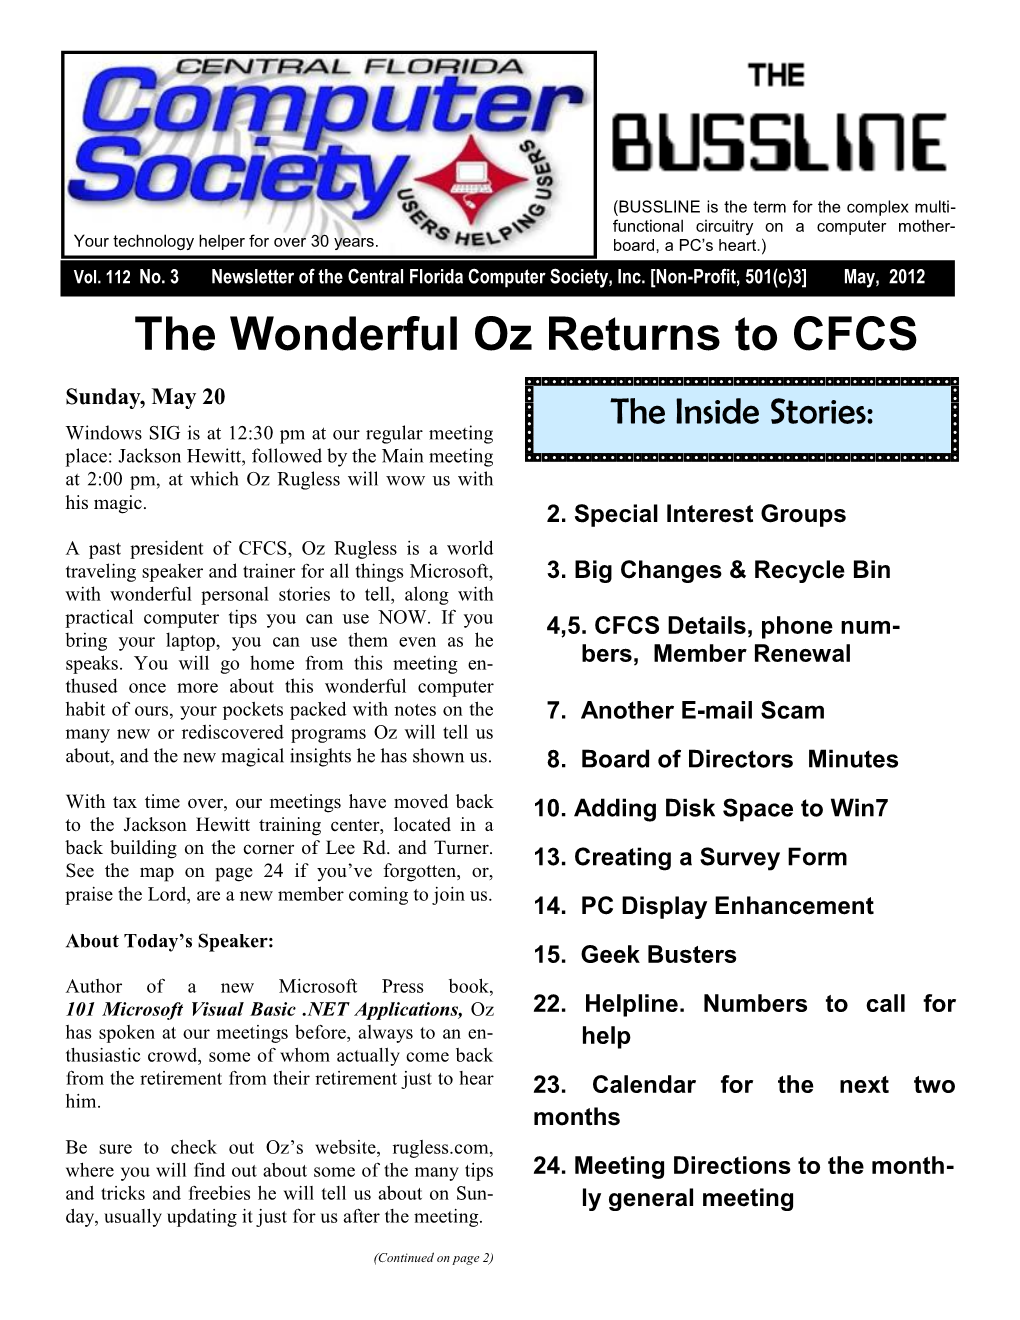 The Wonderful Oz Returns to CFCS